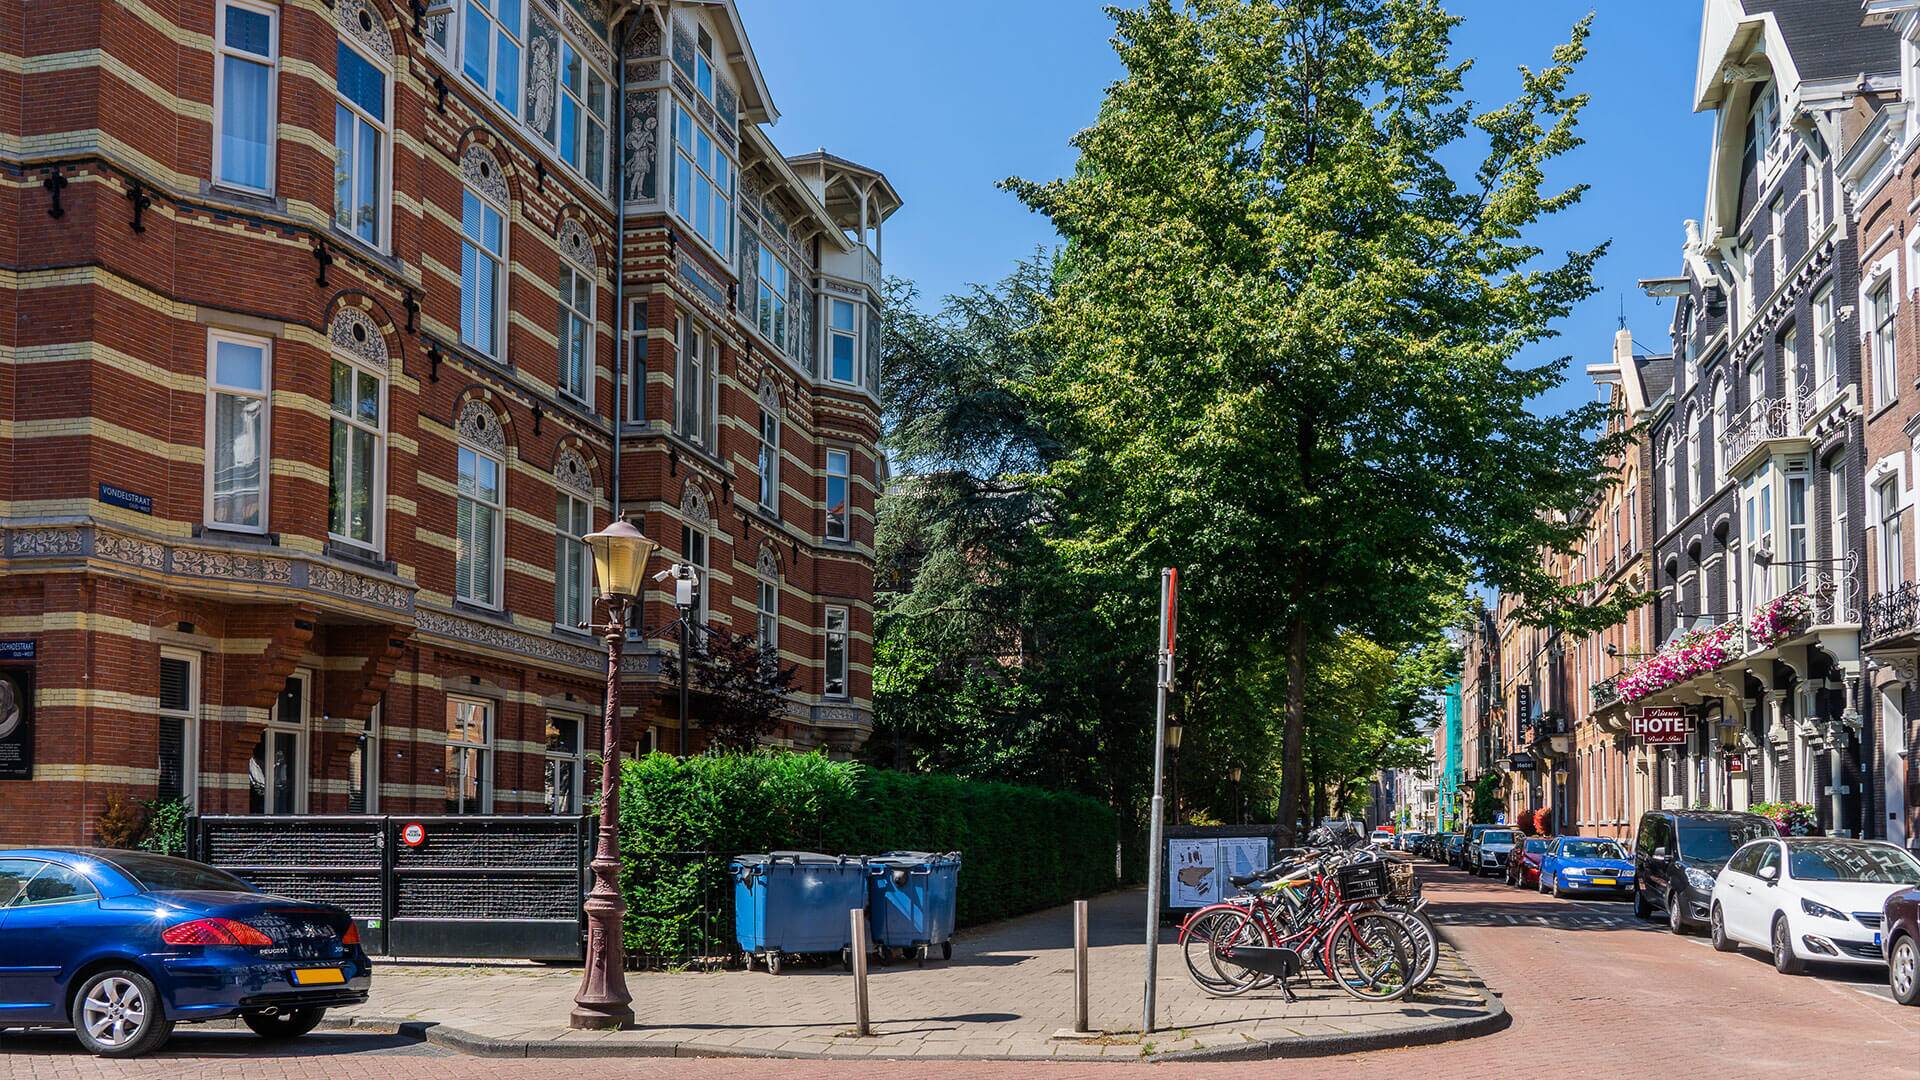 Amsterdam Oud-West